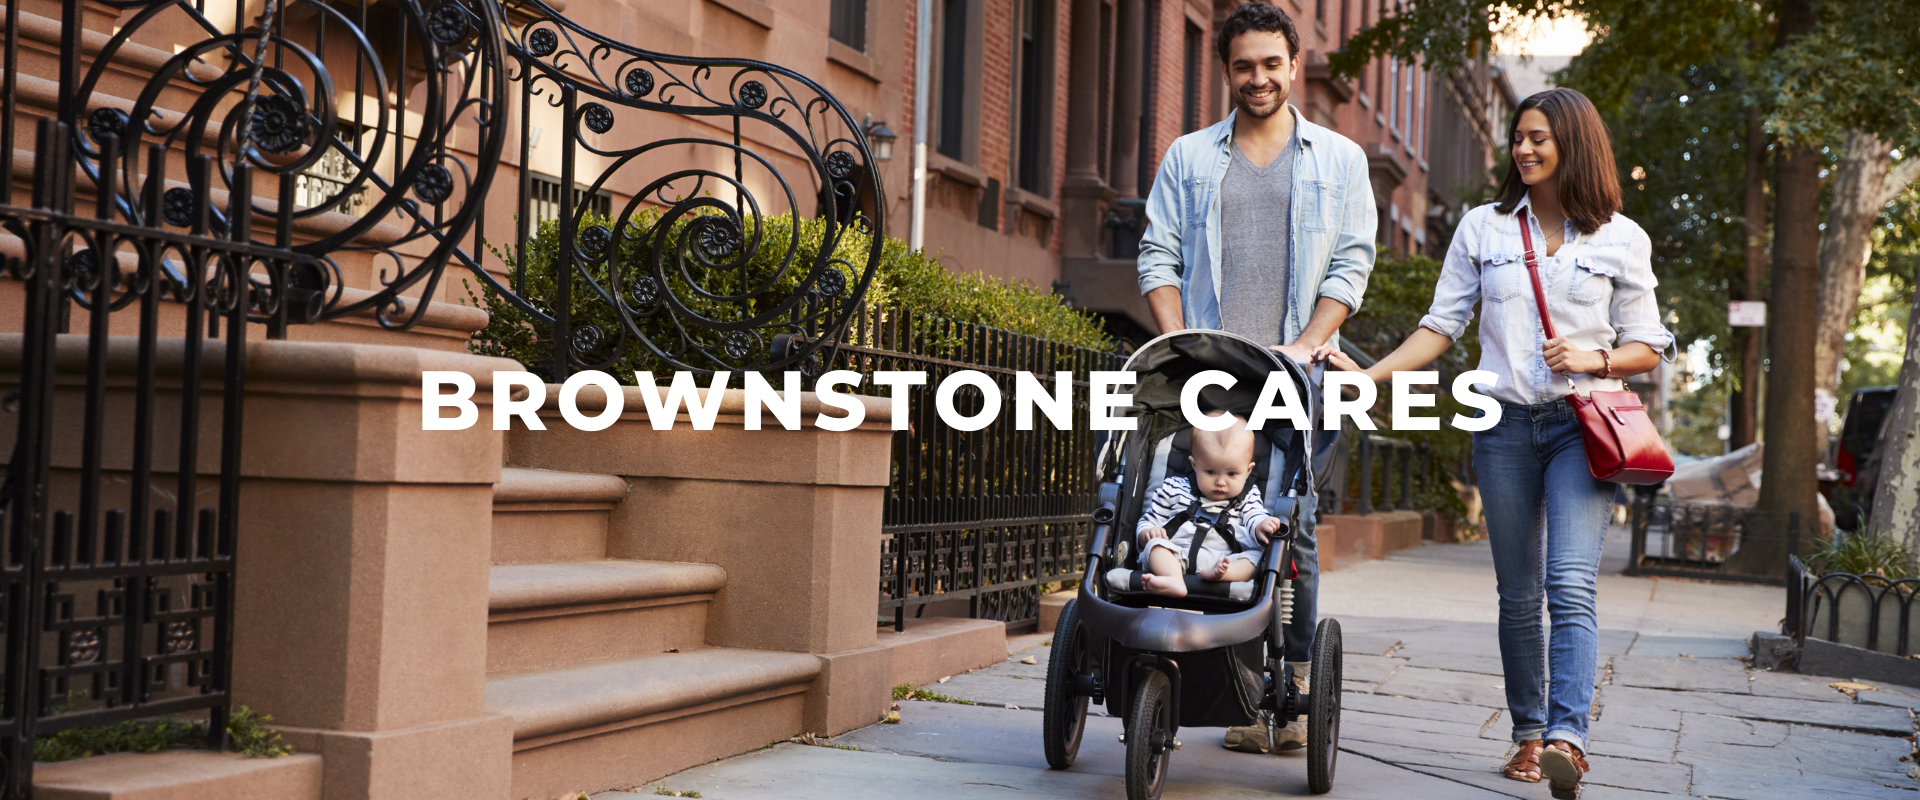 brownstone care